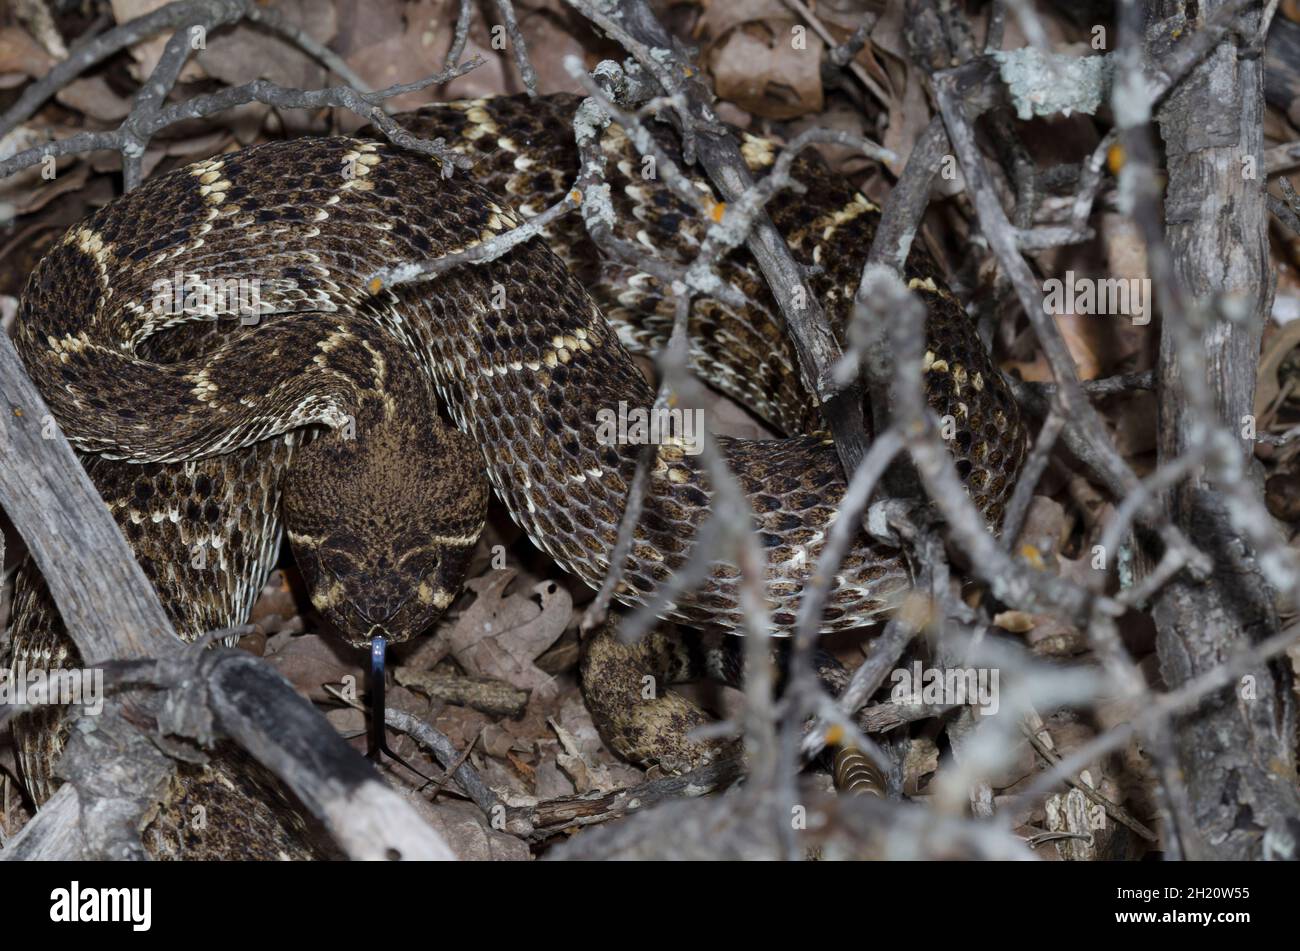 Western Diamondback Rattlesnake, Crotalus atrox, flicking tongue Stock Photo